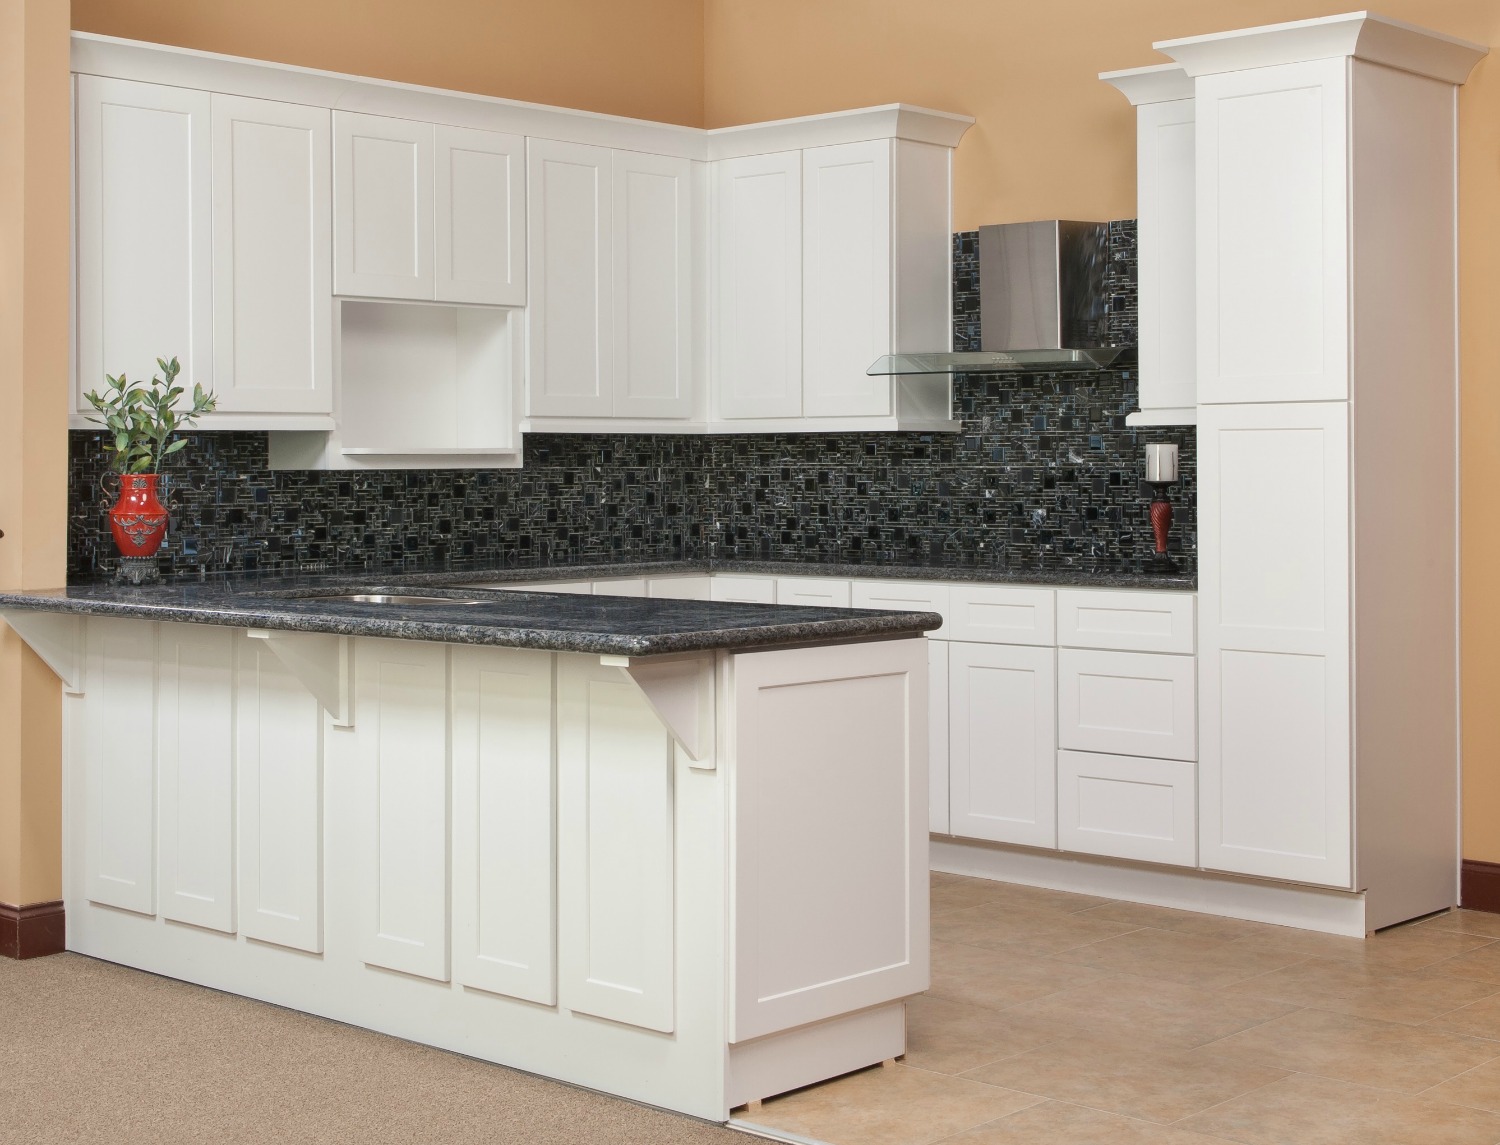 43 White Shaker Kitchen Cabinets Background Kitchen Design Ideas Small Space 